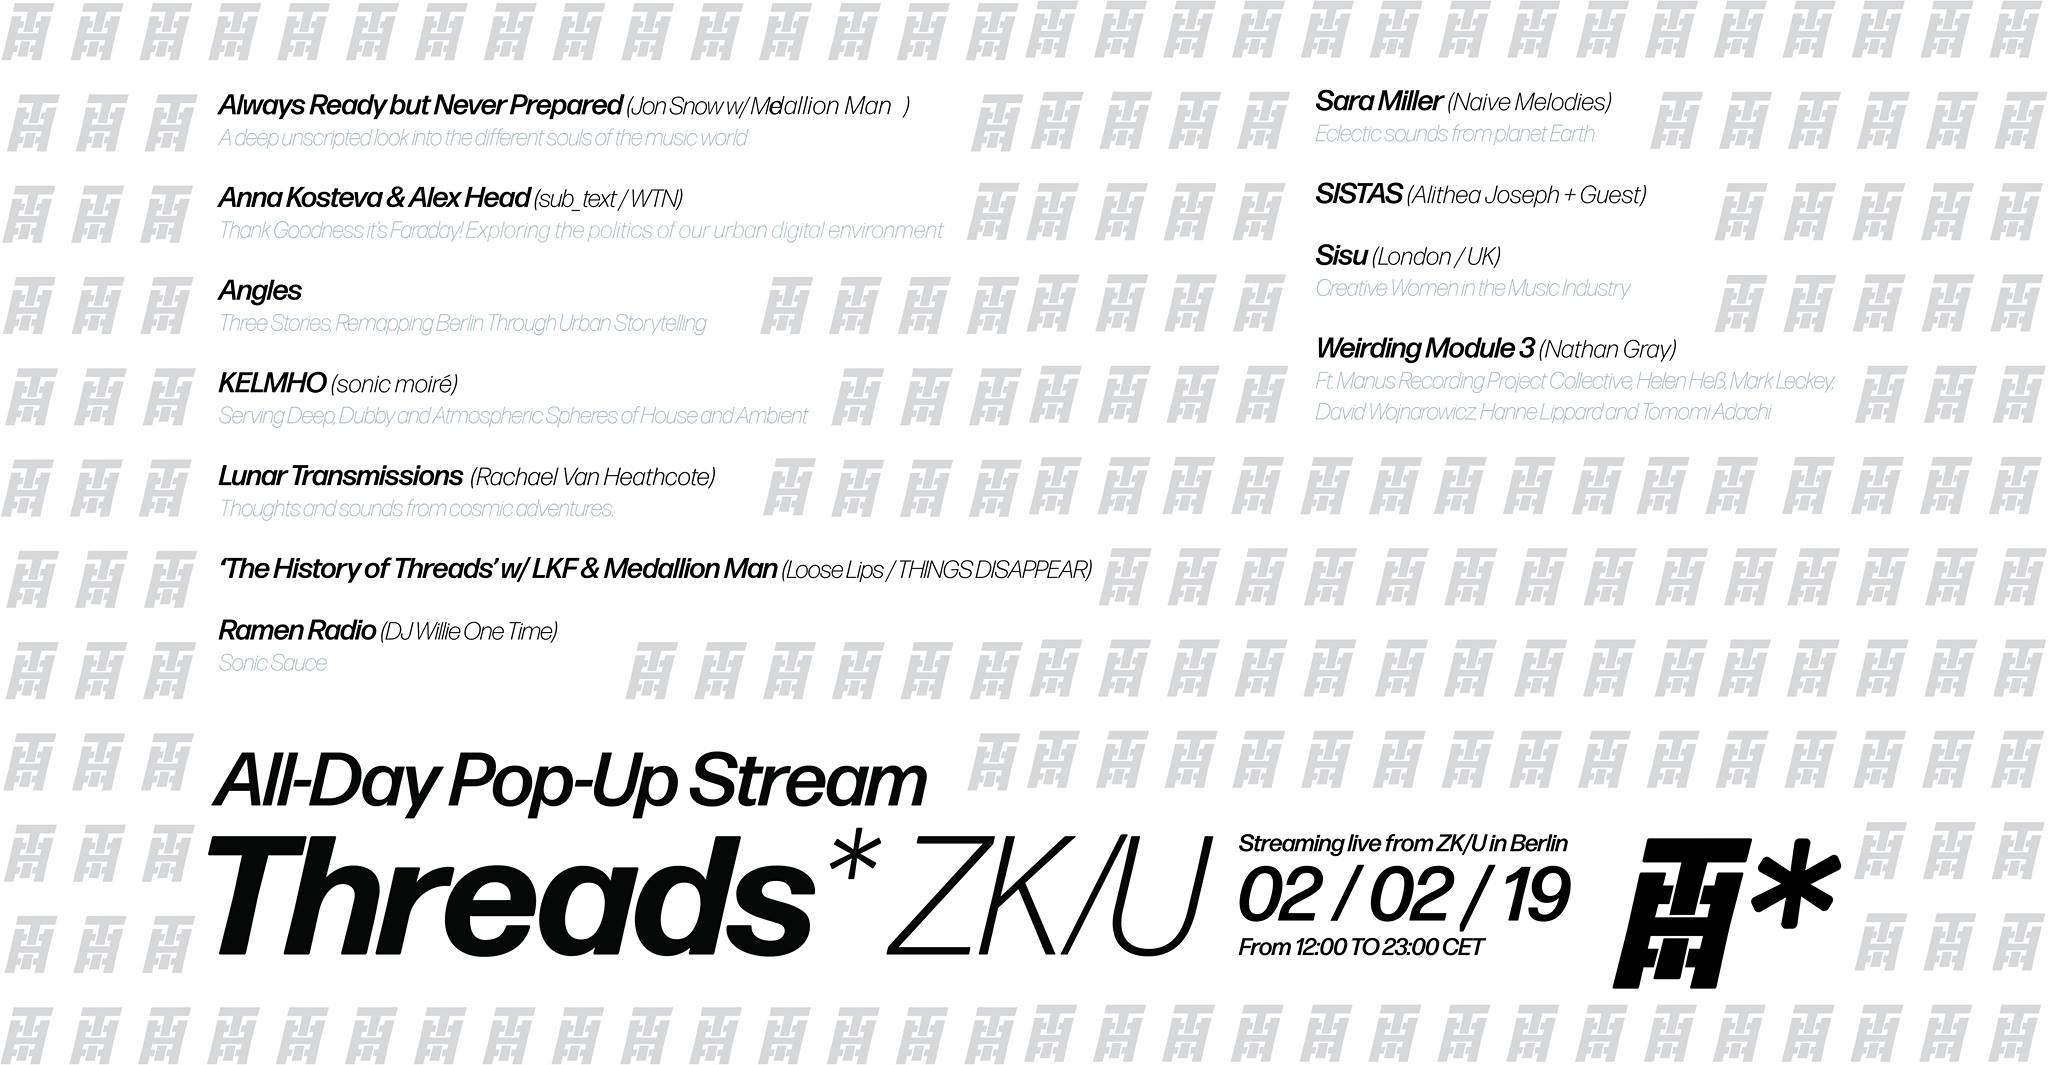 Threads*ZK/U Pop Up – All-Day Stream (02/02/19)